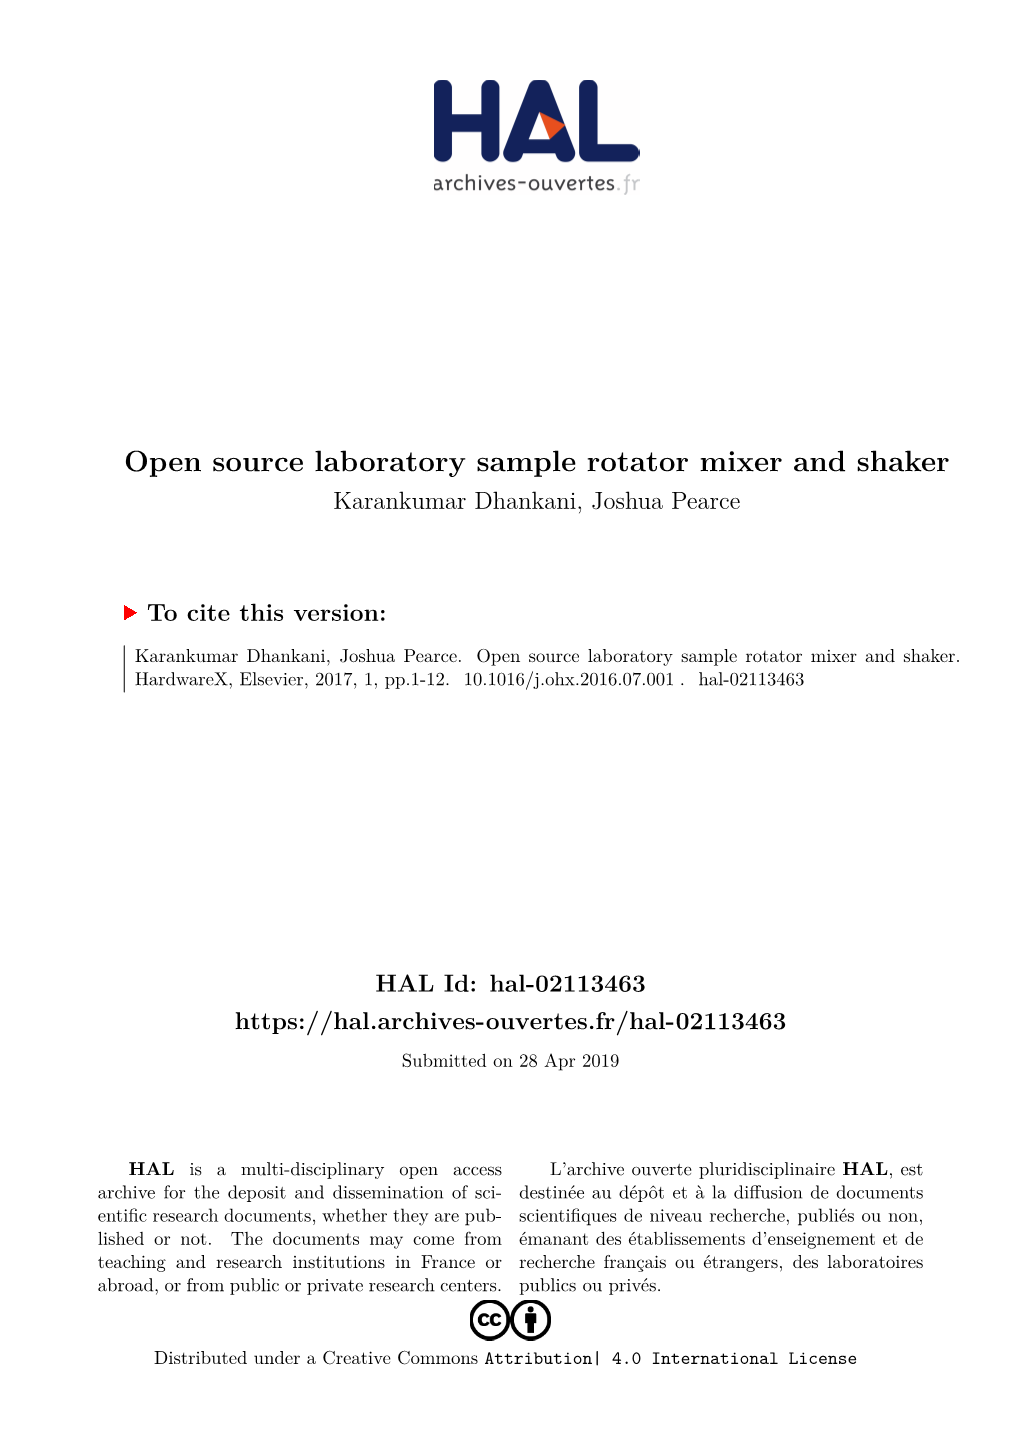 Open Source Laboratory Sample Rotator Mixer and Shaker Karankumar Dhankani, Joshua Pearce